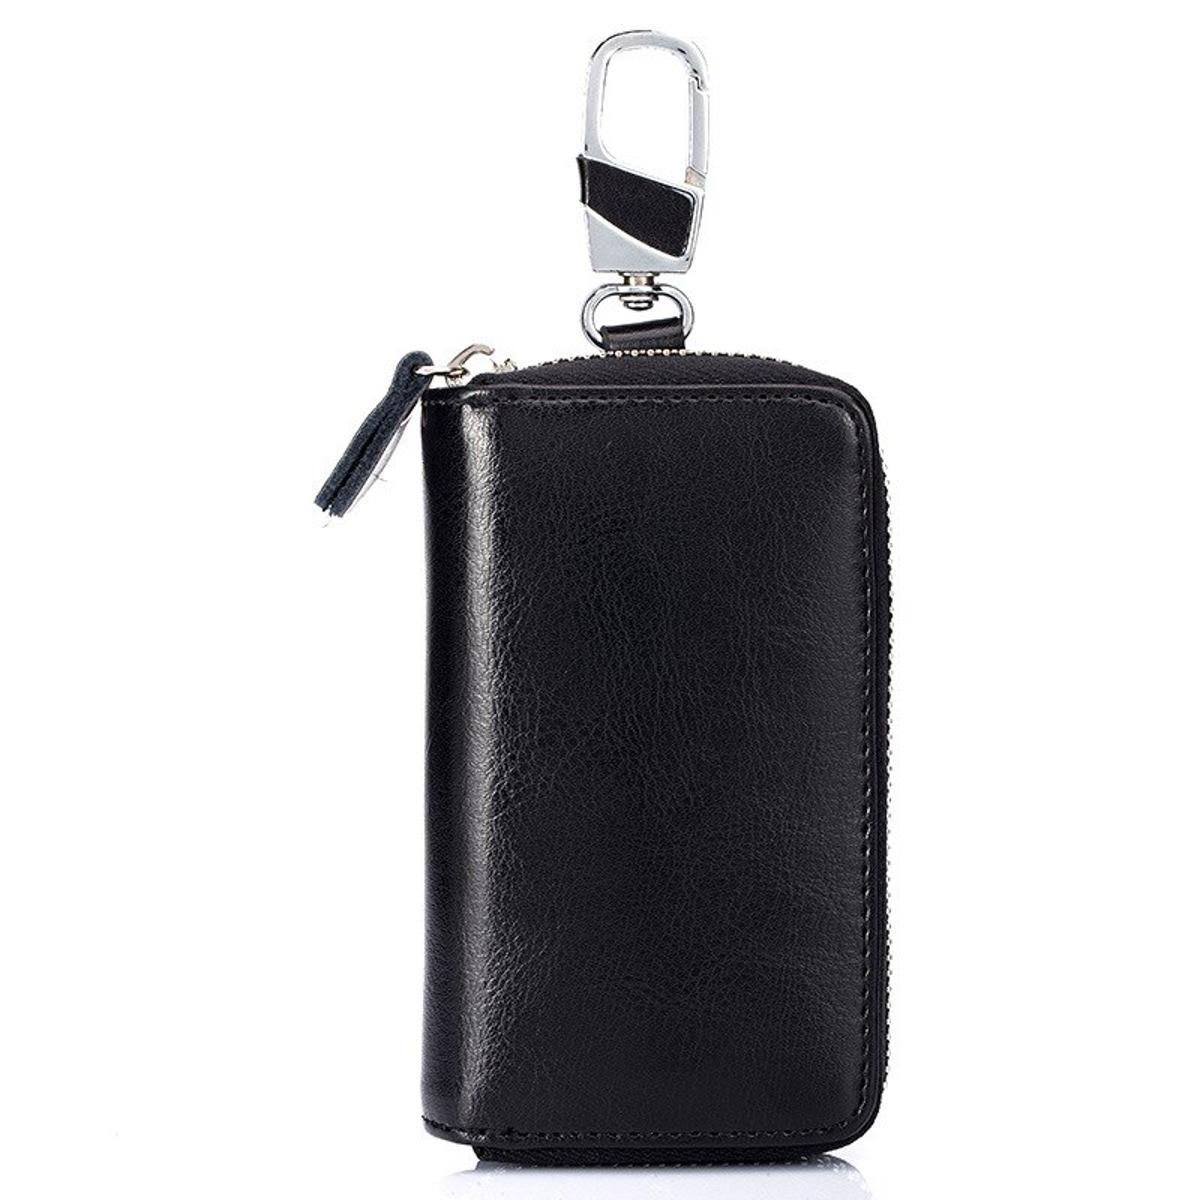 WestCreek’s Brand New Genuine Leather Double Zipper Keychain Wallets Black